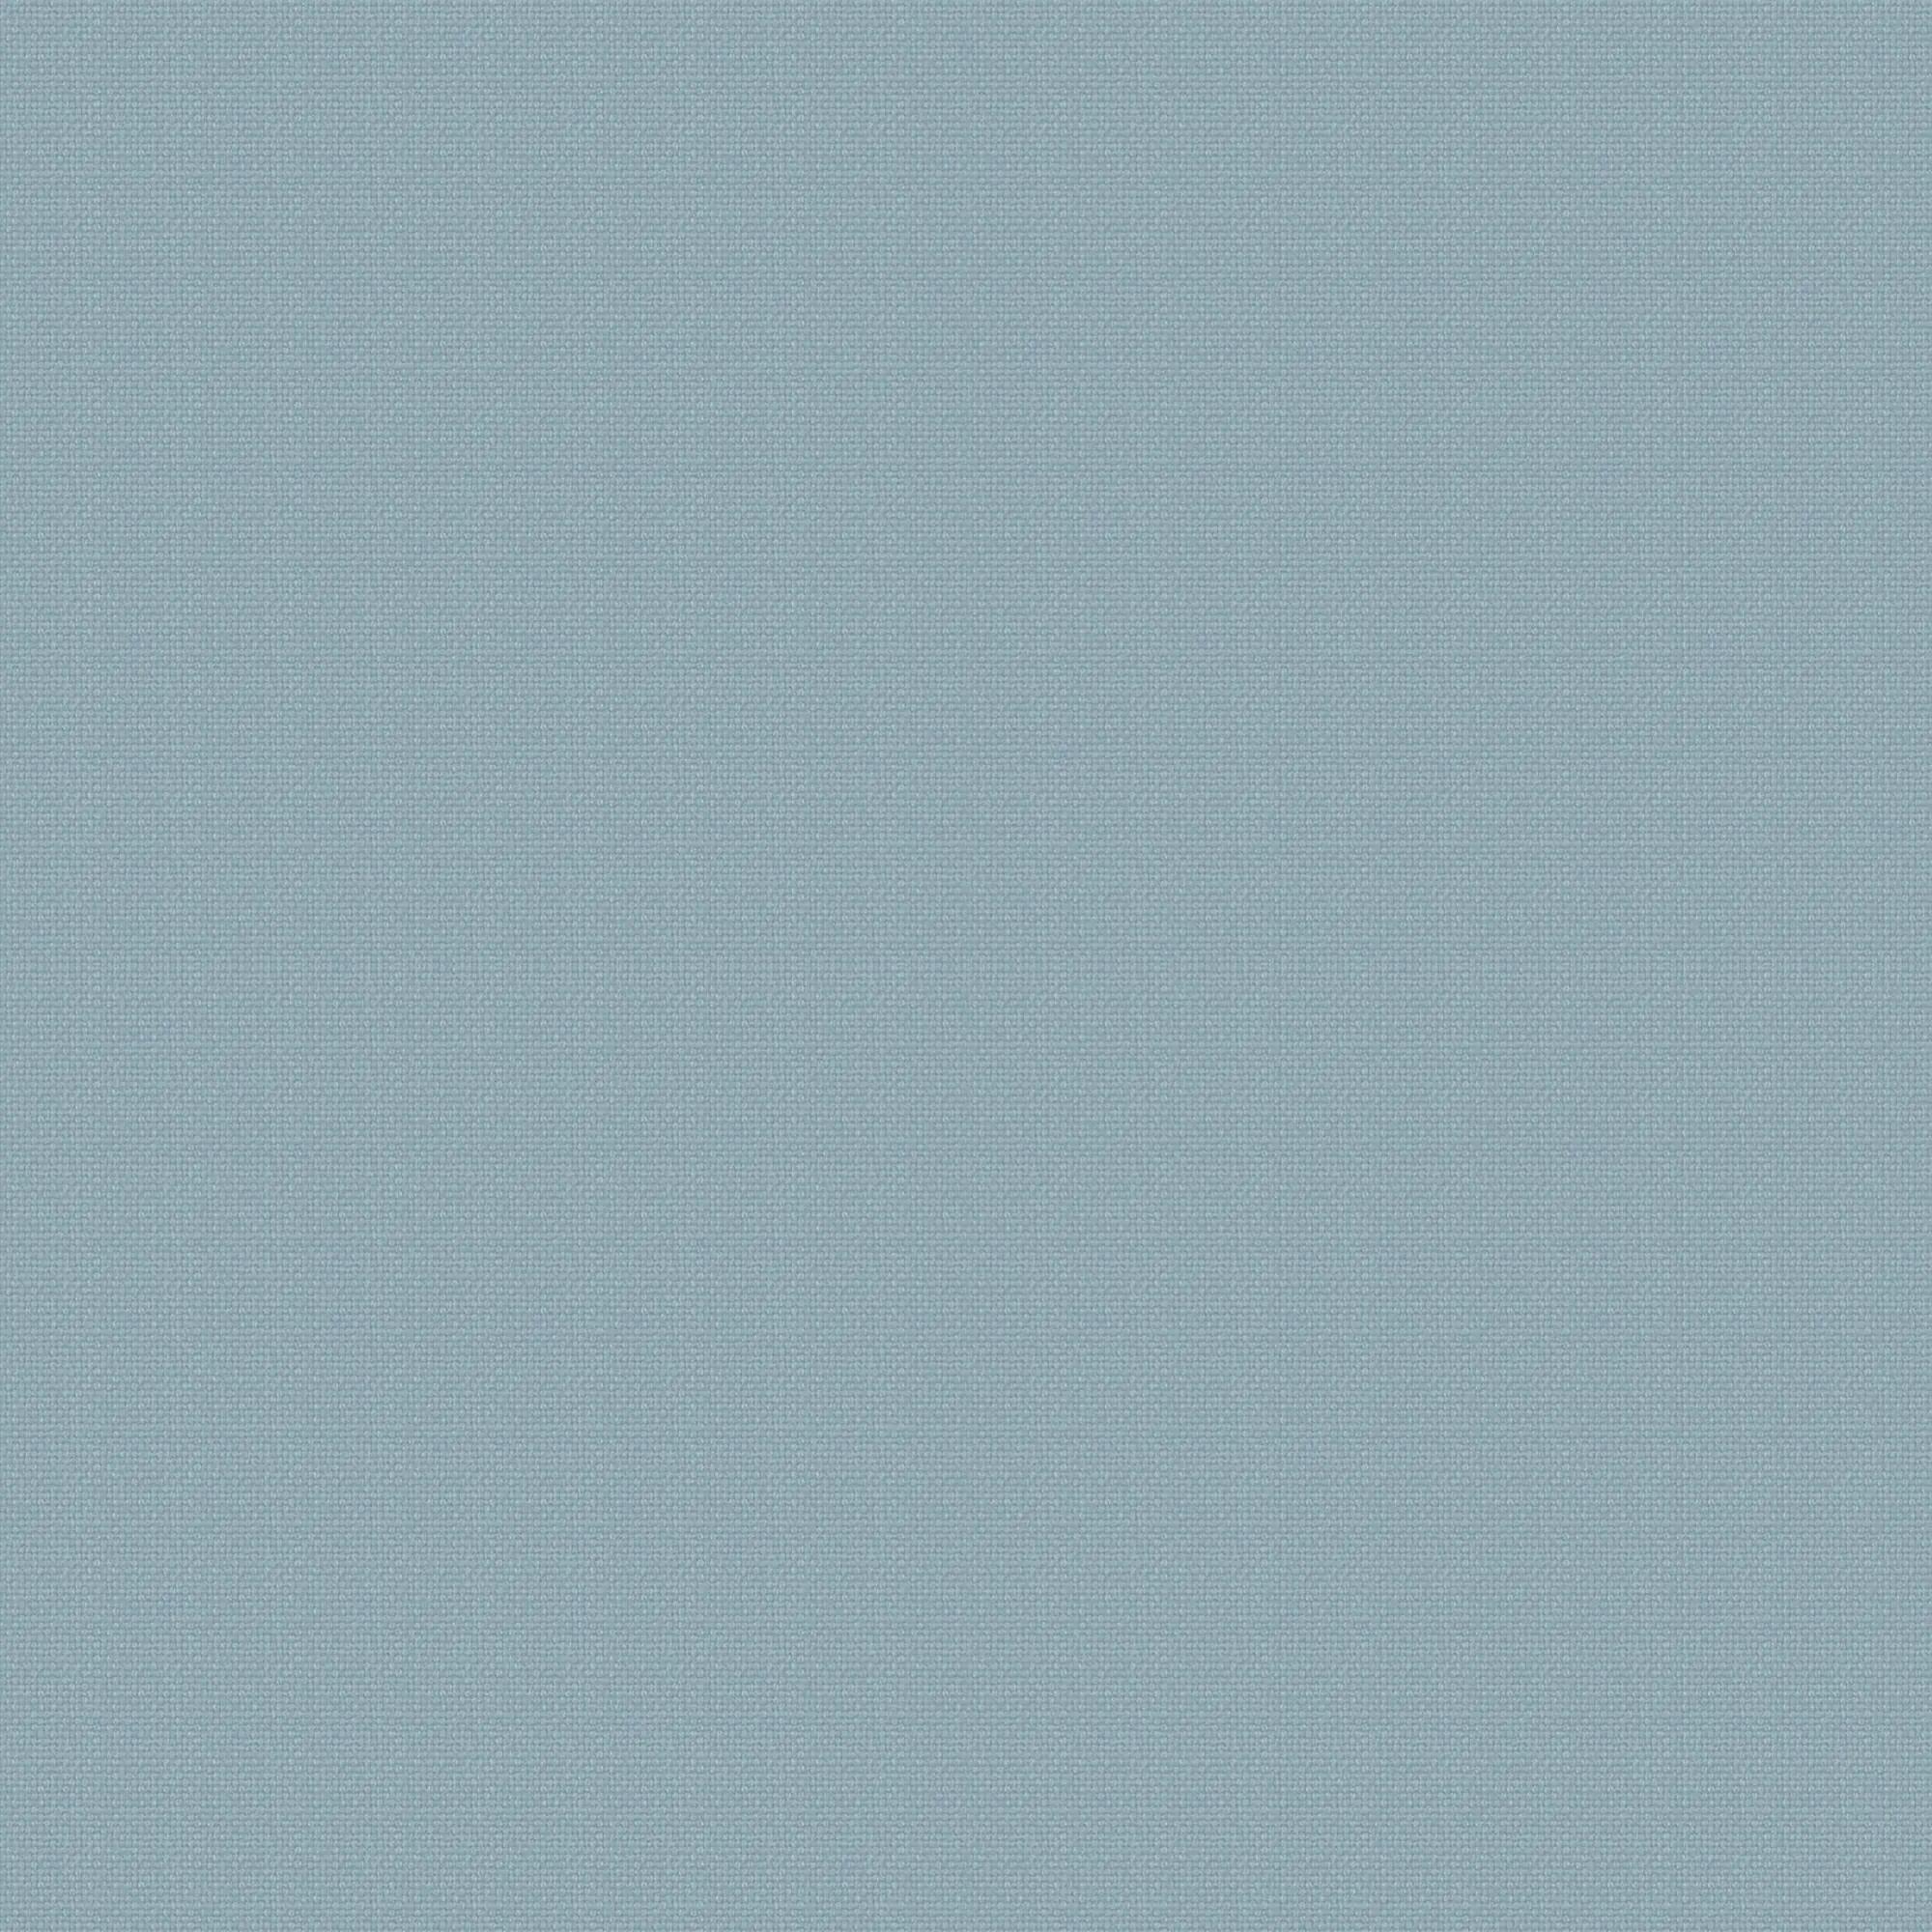 Tela al corte loneta mimos azul ancho 280 cm